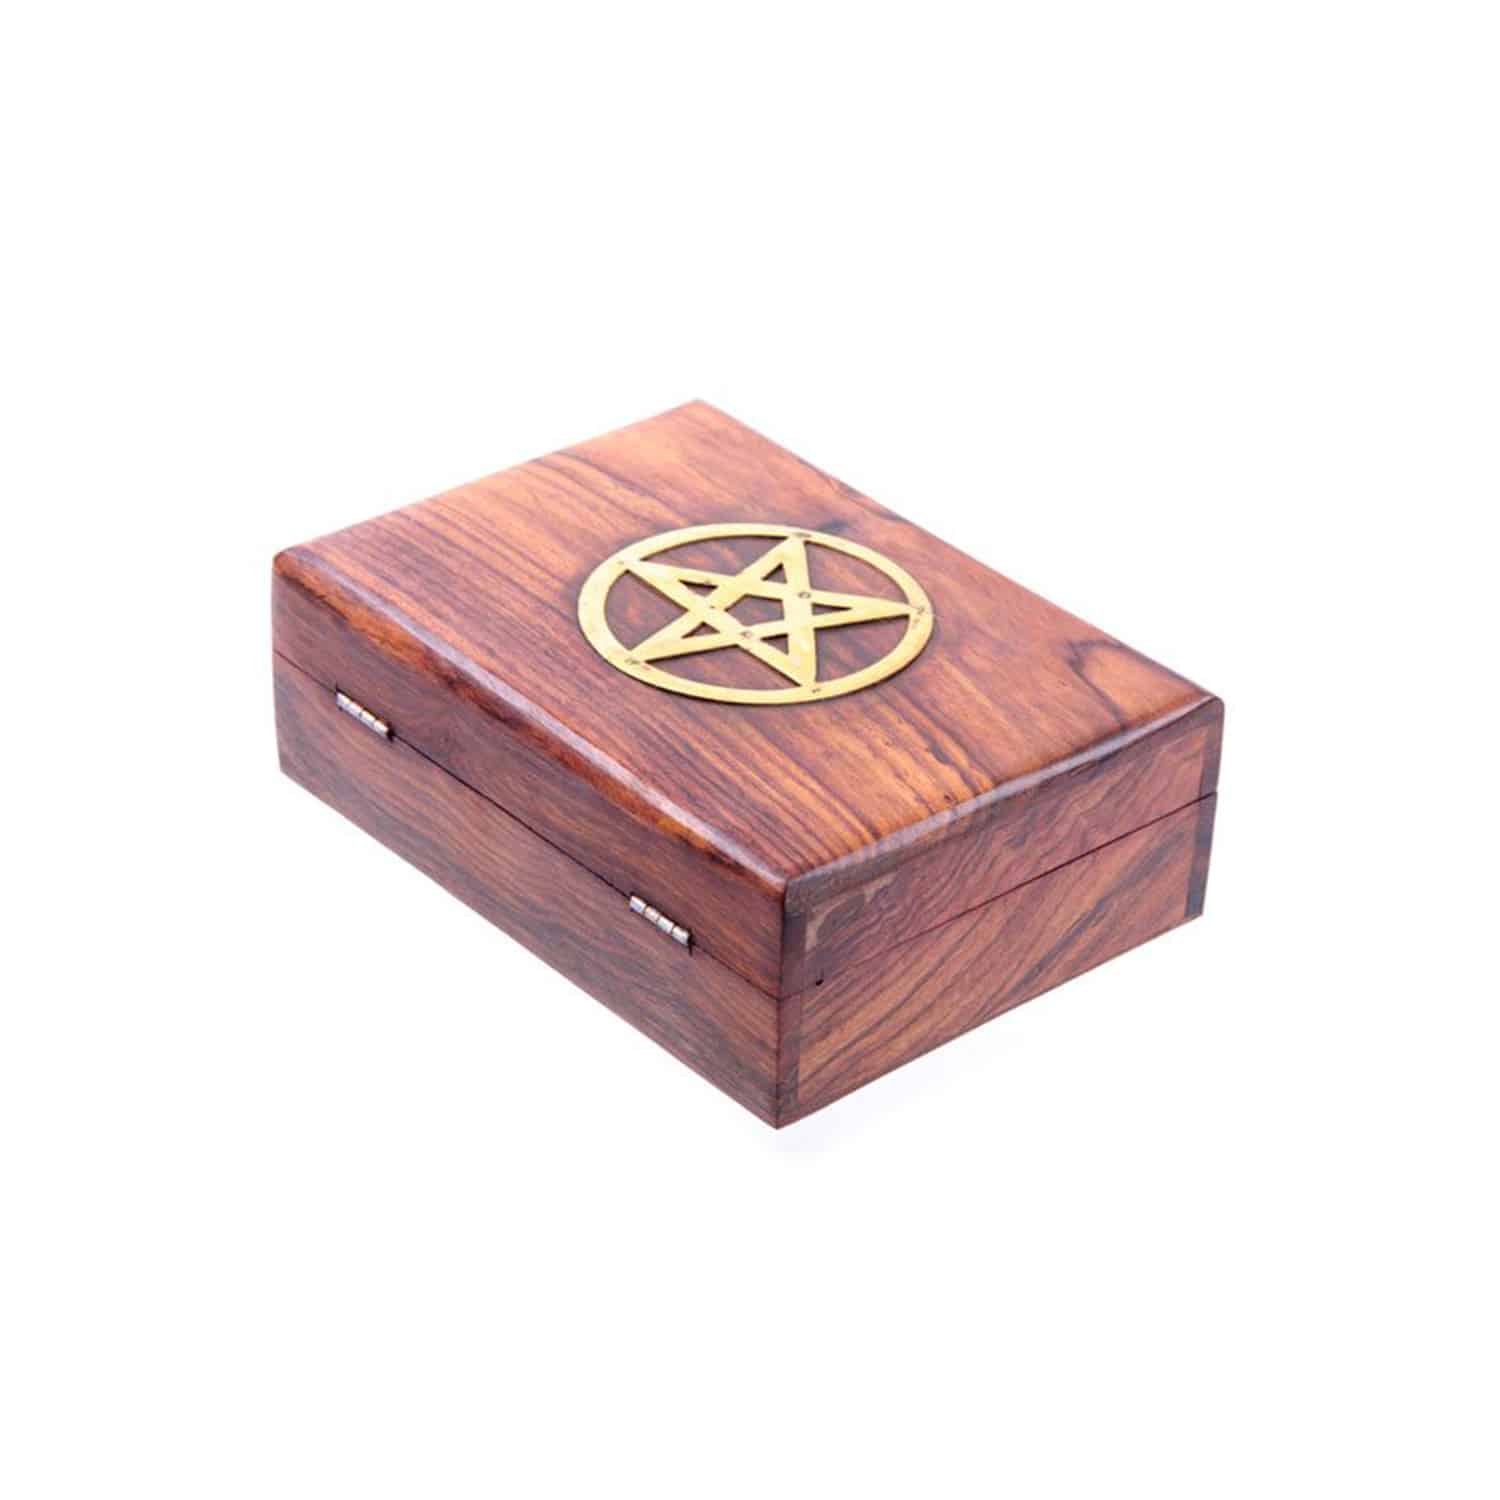 Sheesham Wood Trinket Box with Pentagram Inlay